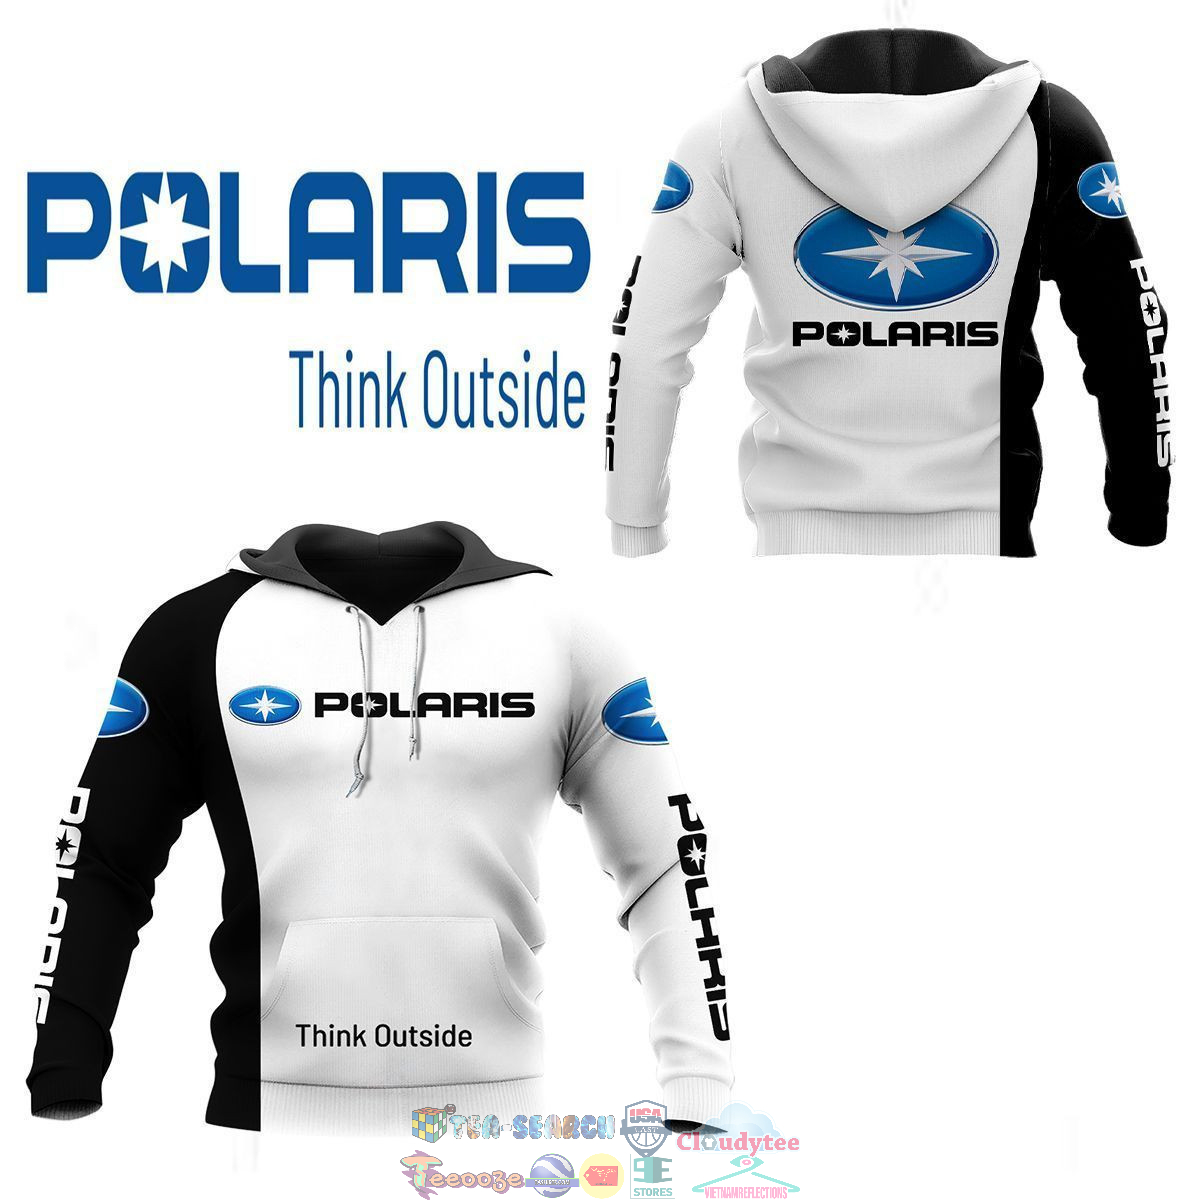 boAQu1Az-TH160822-16xxxPolaris-Think-Outside-White-3D-hoodie-and-t-shirt3.jpg